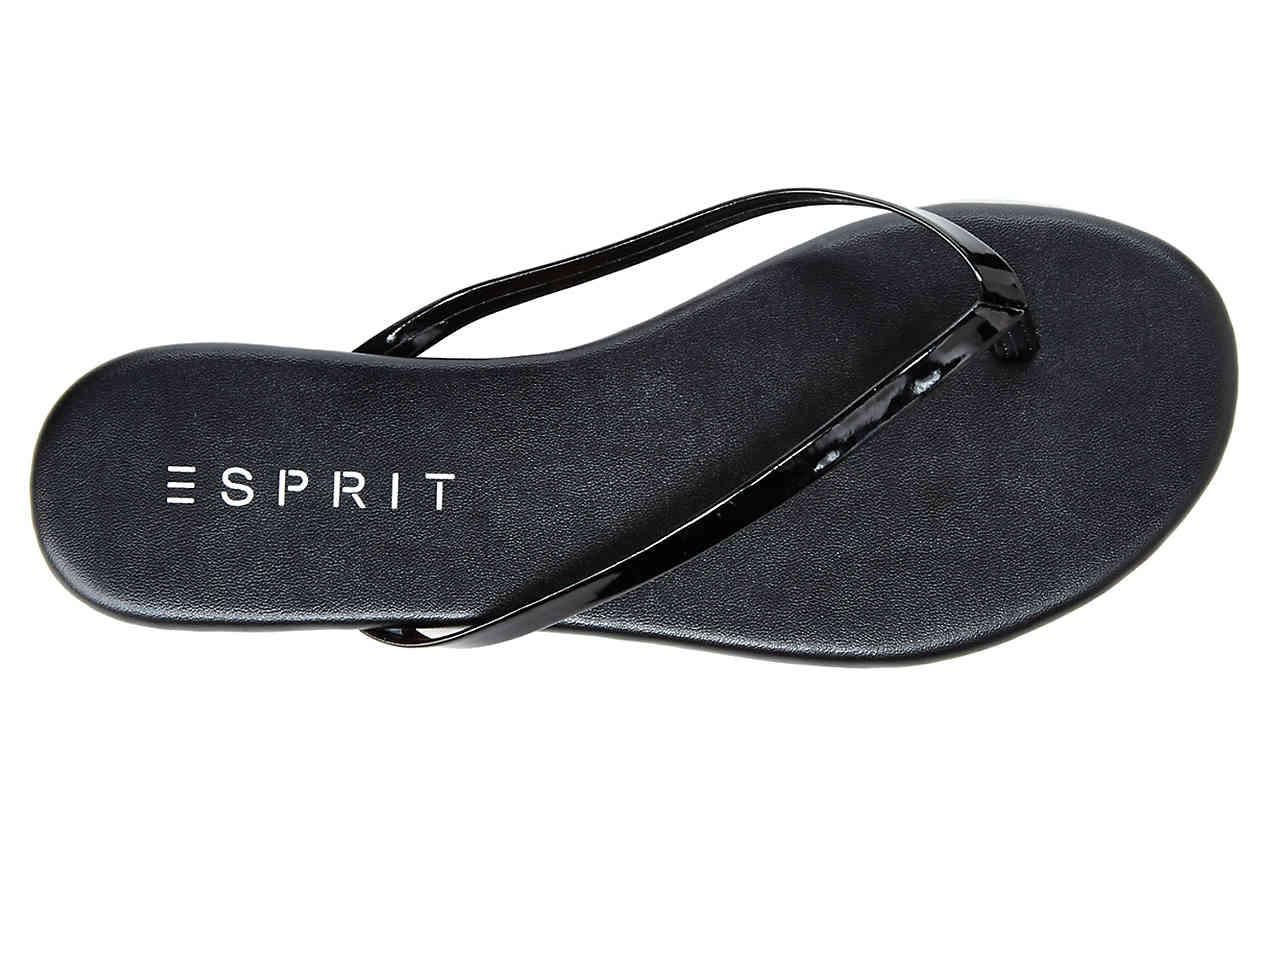 Esprit Party Flip Flop in Black - Lyst